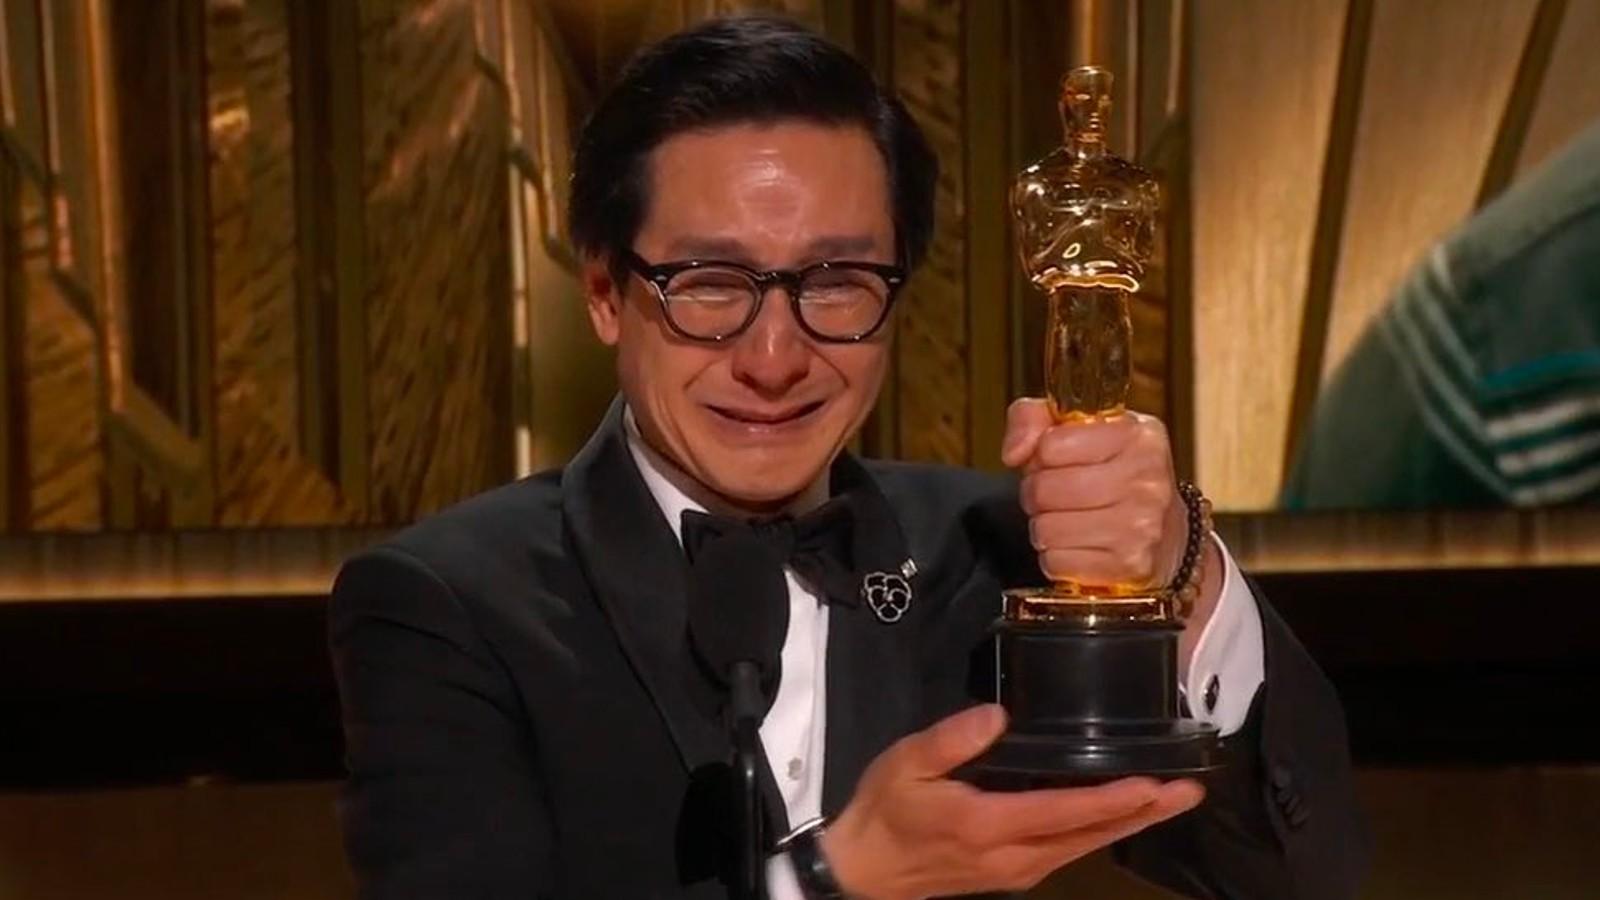 Ke Huy Quan with his Oscar at this year's Academy Awards